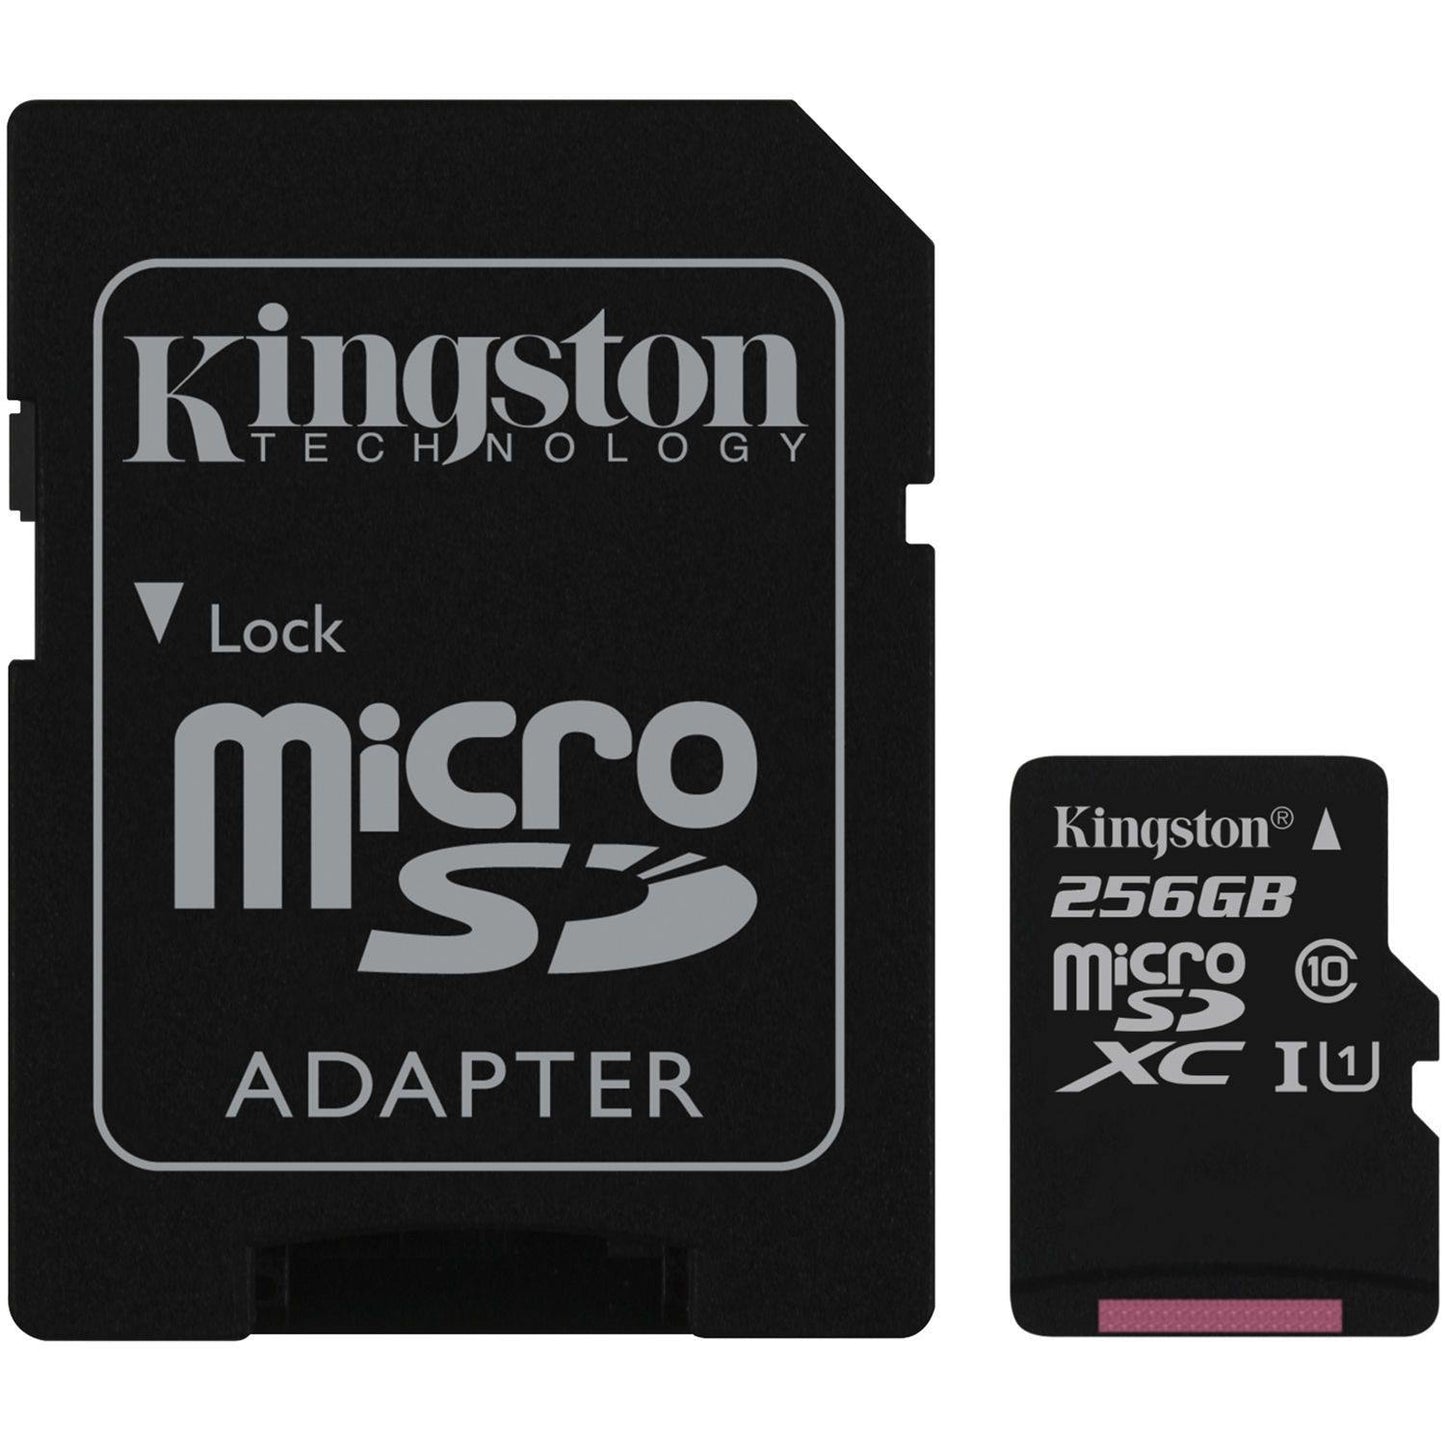 Kingston 256GB Canvas Select UHS-I microSDXC Memory Card with SD Adapter - netgear-gi